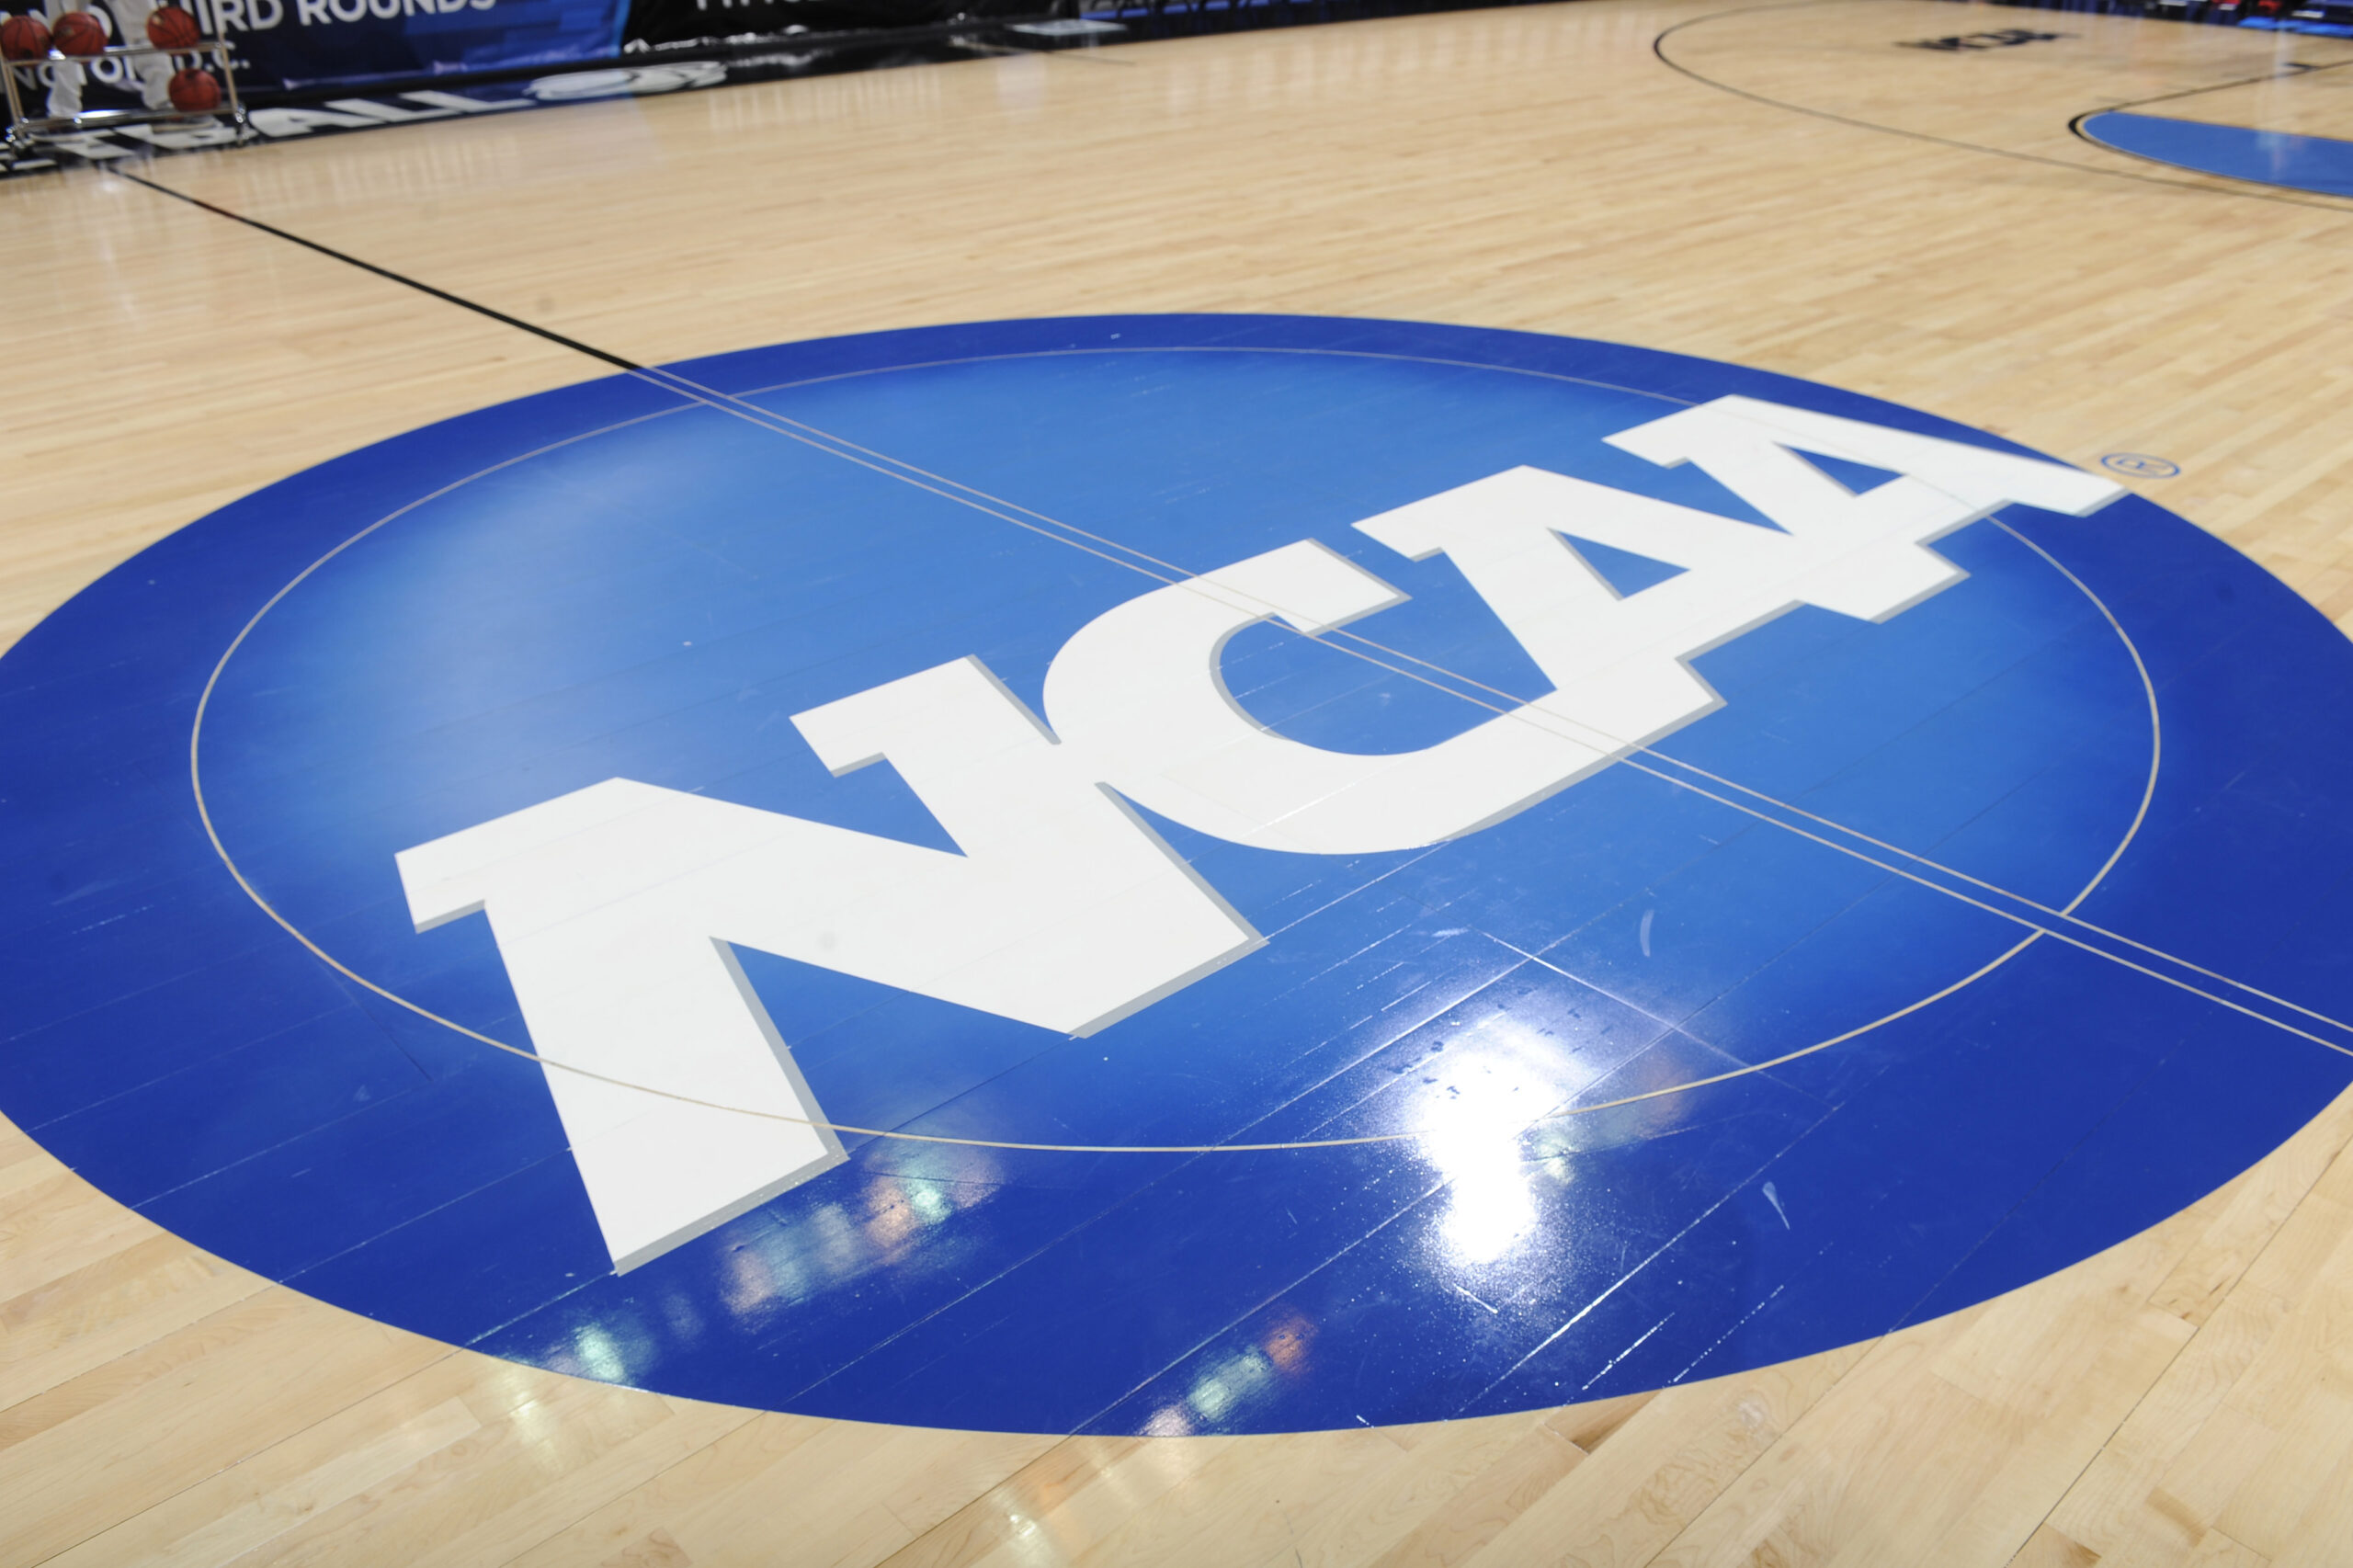 Card Thumbnail - NCAA Focus On Big-Money Sports Creates Gender Disparities: Report